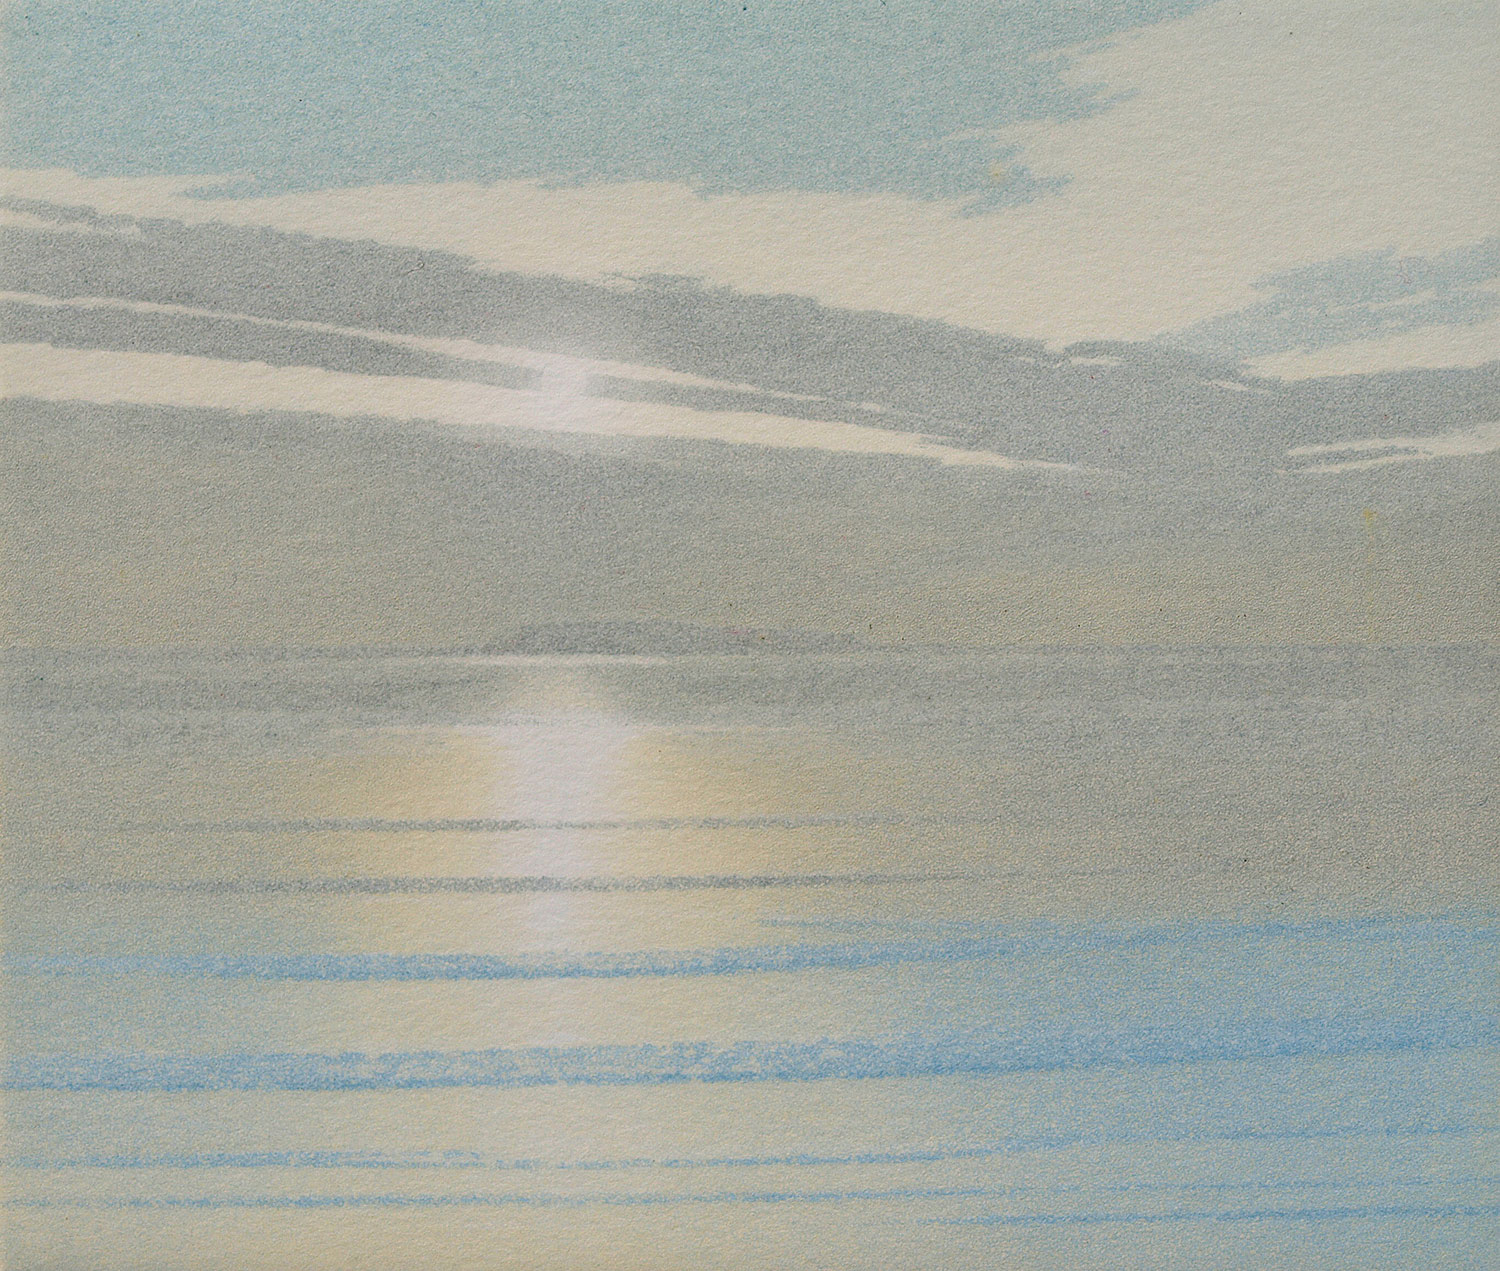 Michael Fairclough 11. THE SEA AND THE SKY II (SKOKHOLM)